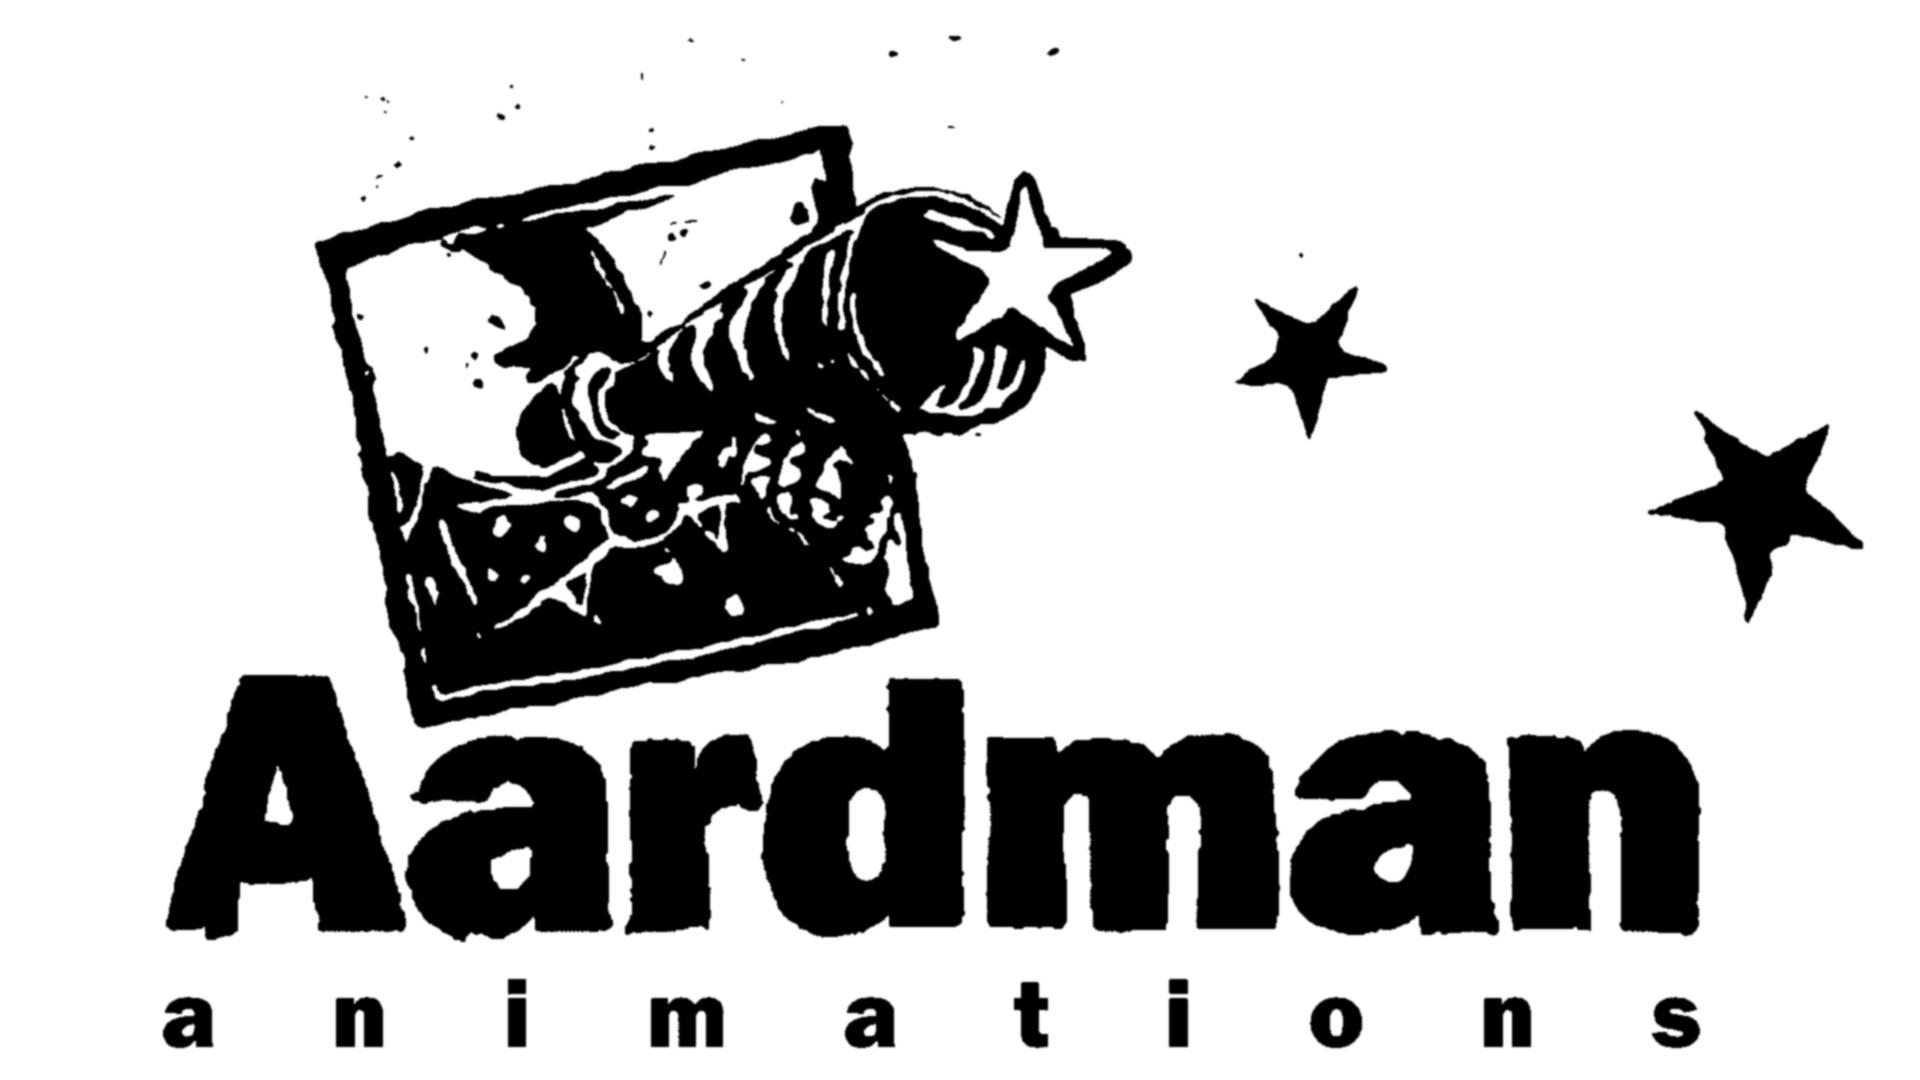 Aardman Logo - Image - AARDMAN ANIMATIONS 1992 PRINT LOGO.png | Logopedia | FANDOM ...